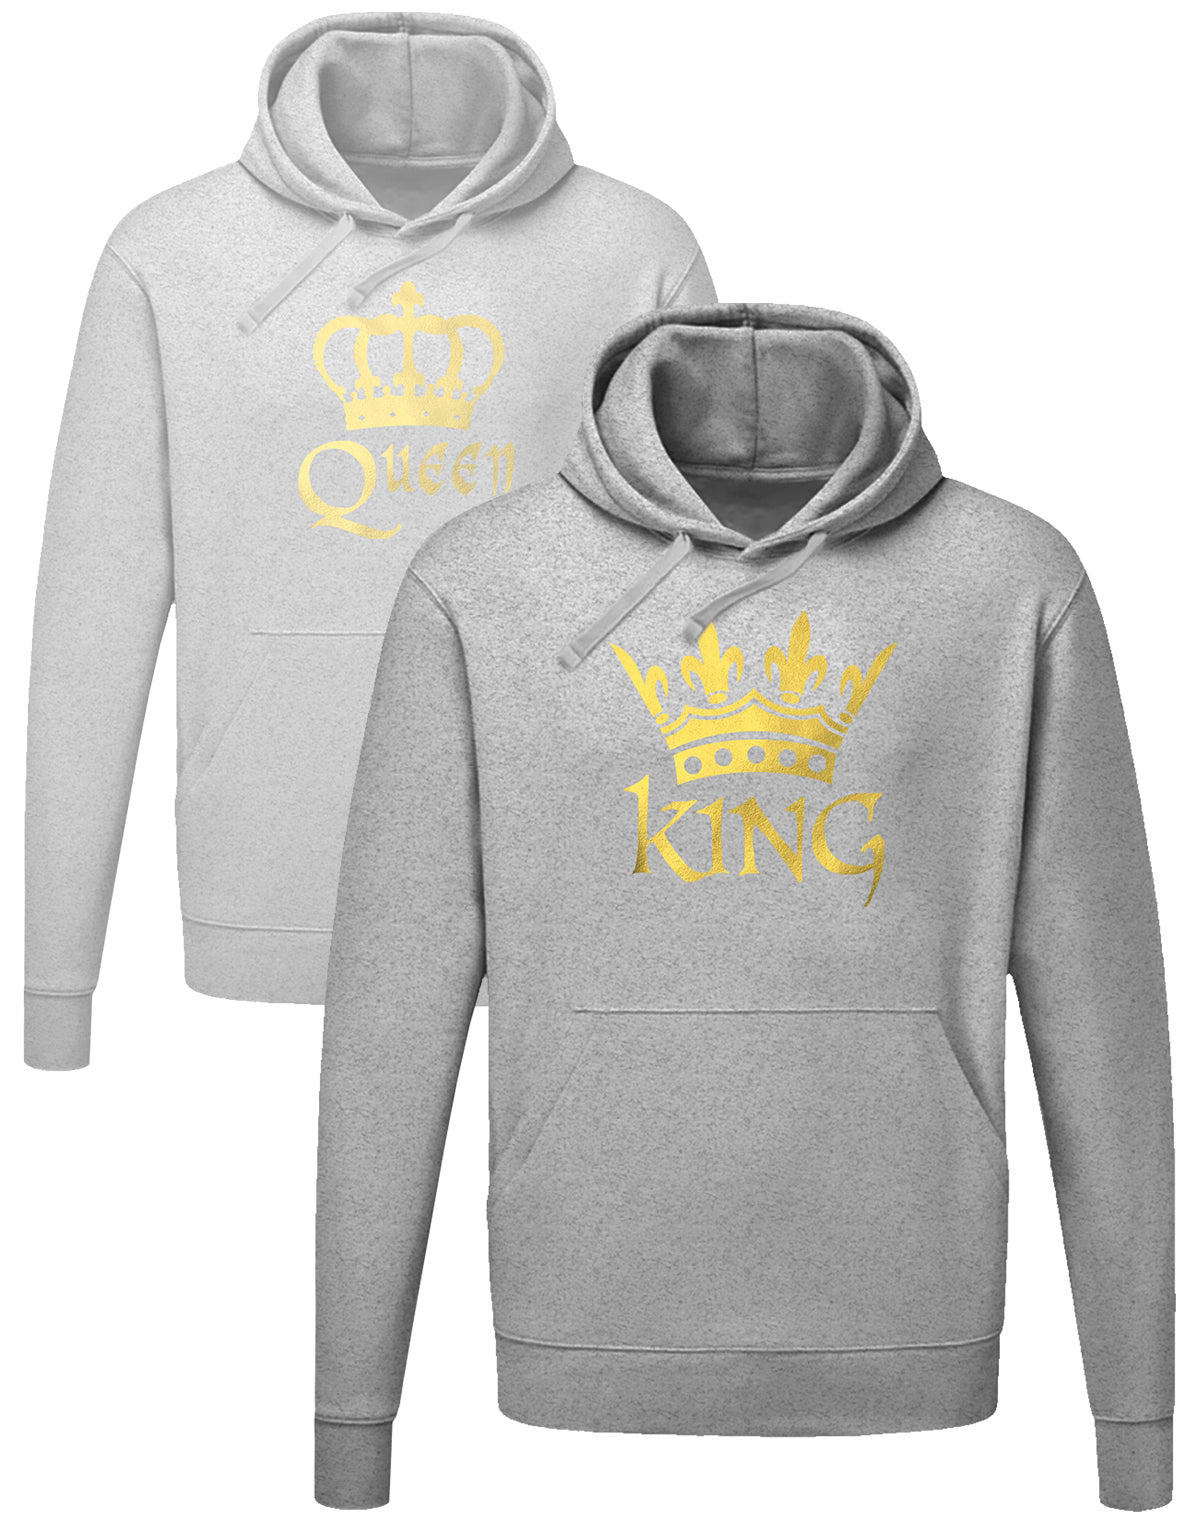 Couple Hoodie King Queen King mit Krone in Gold Grau